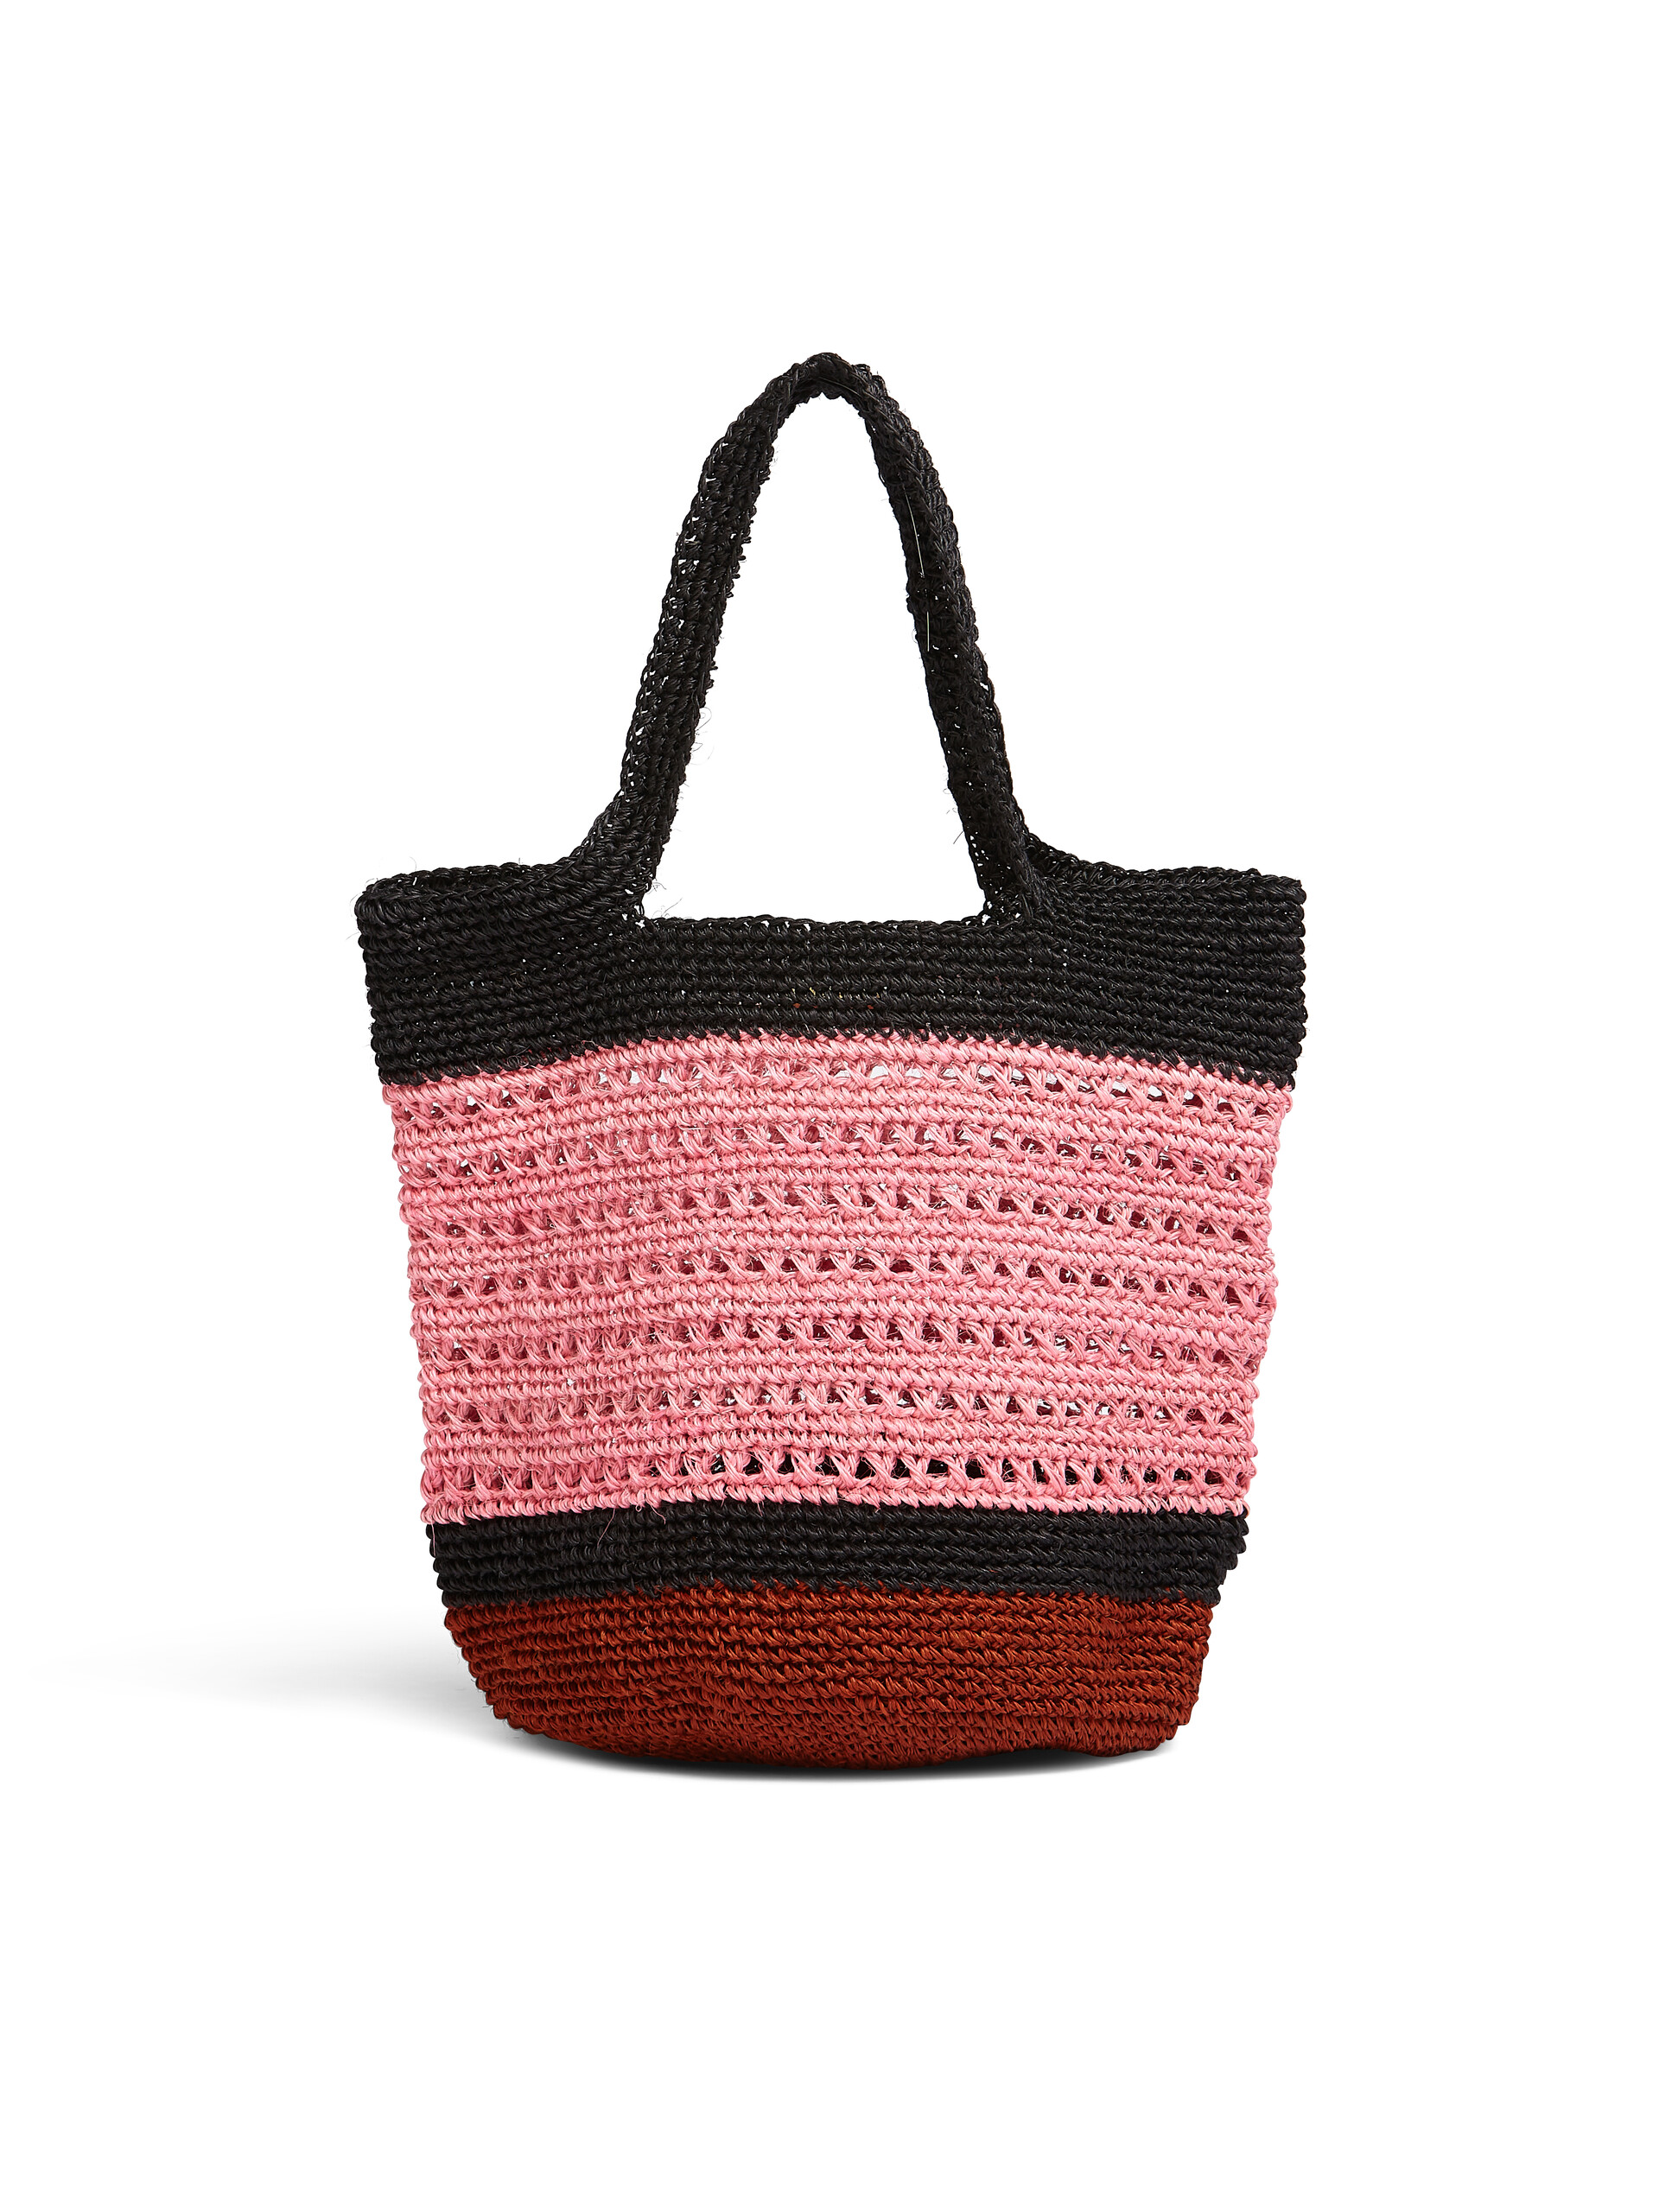 MARNI MARKET DRUM bag in pink and black natural fiber - Shopping Bags - Image 3